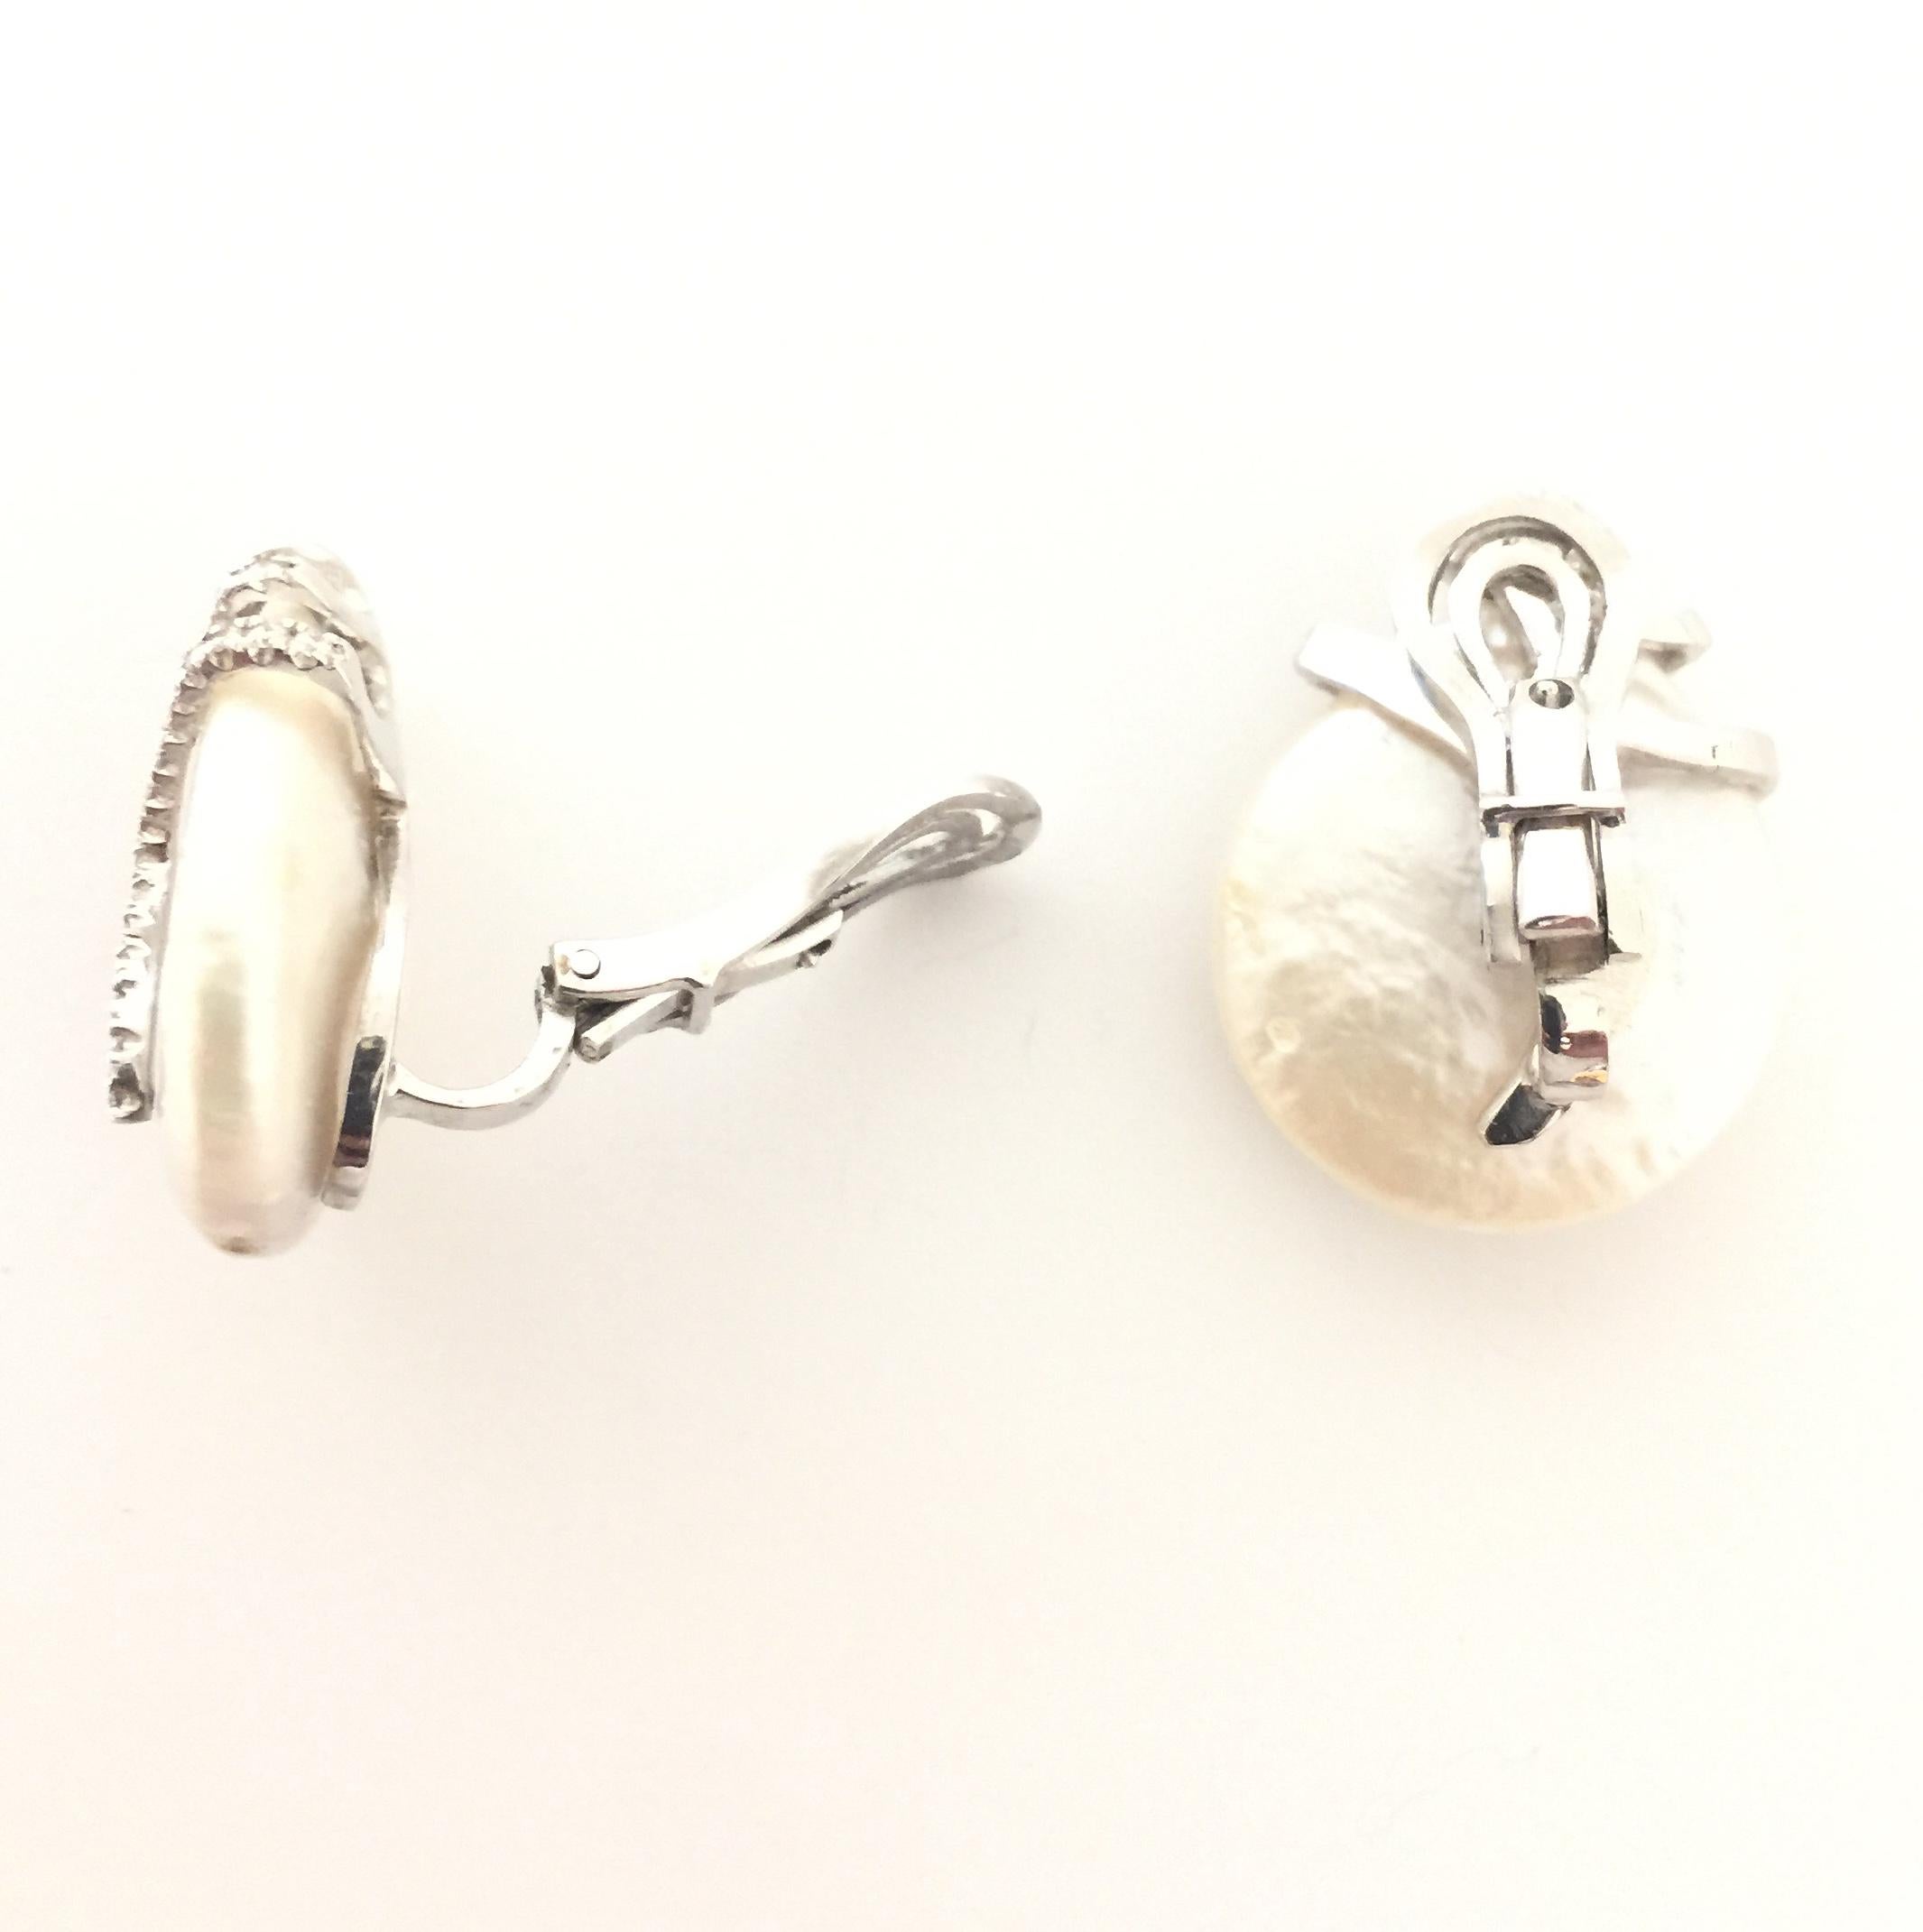 Boucle d'oreille Yvel Perles et Diamants.
or blanc 18k 
Perles 
Diamants 0..60ctw
Boucle d'oreille à clip
E295FLLW